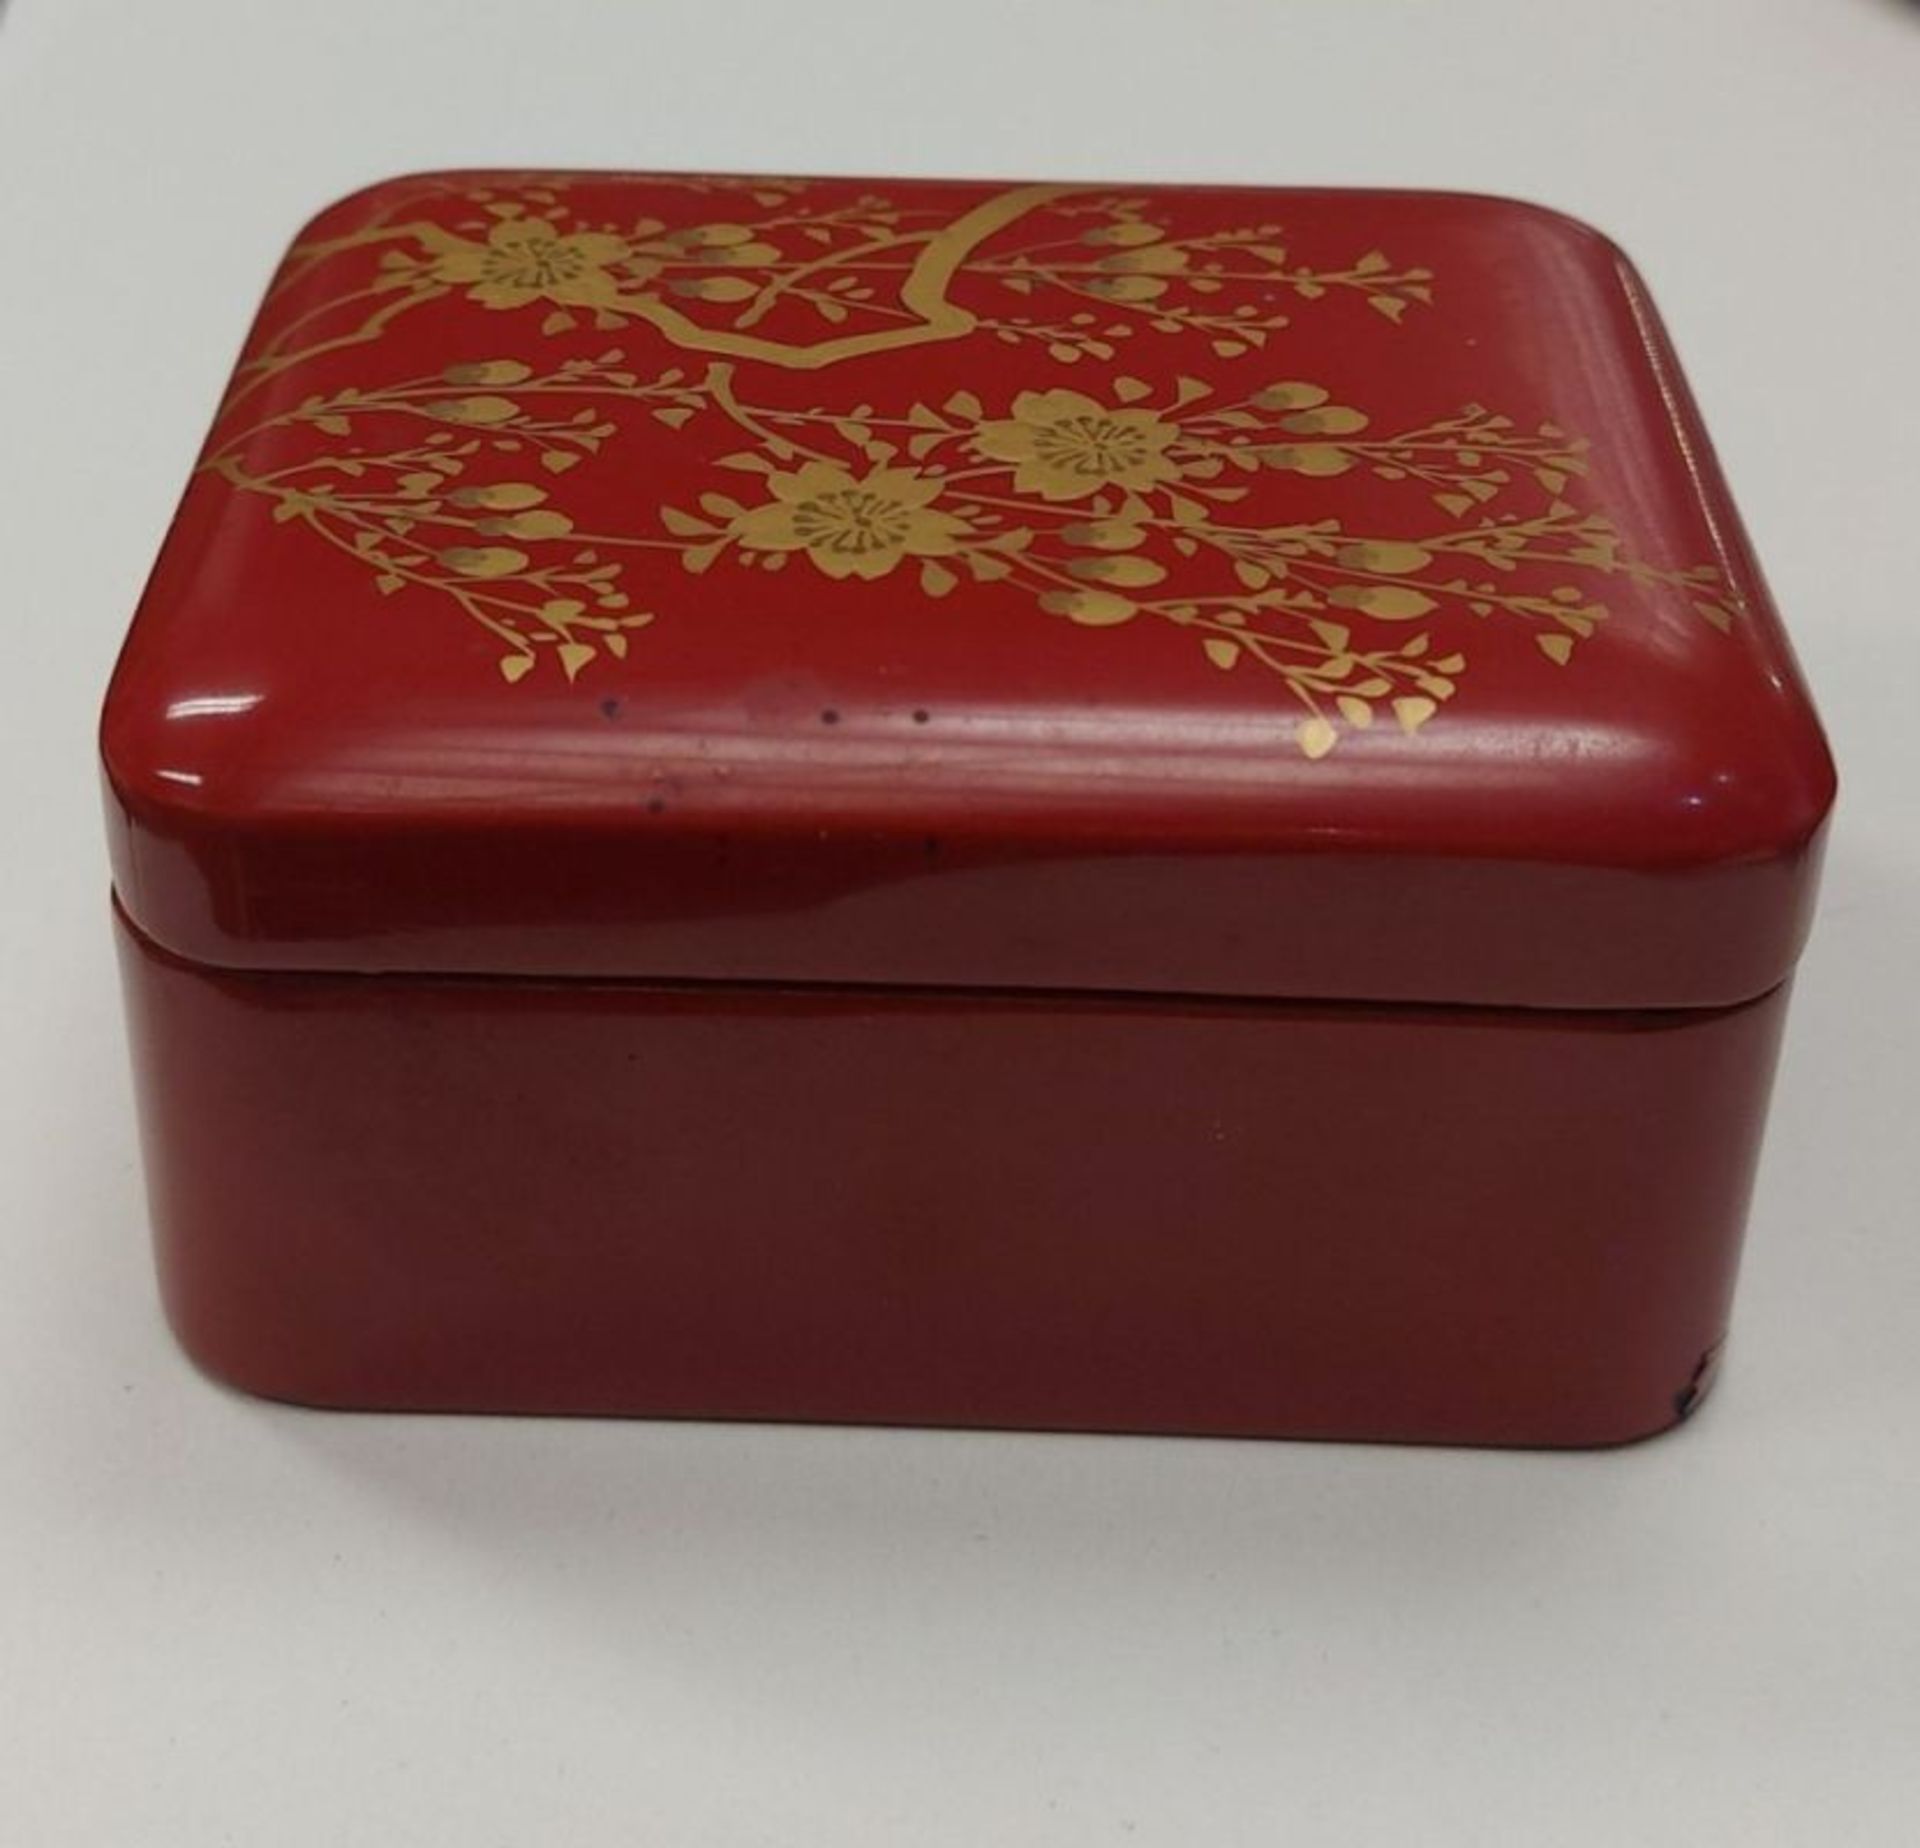 Edle alte chinesische Lackdose Schachtel rot mit goldenem Dekor 8x4x7cm - Image 5 of 6